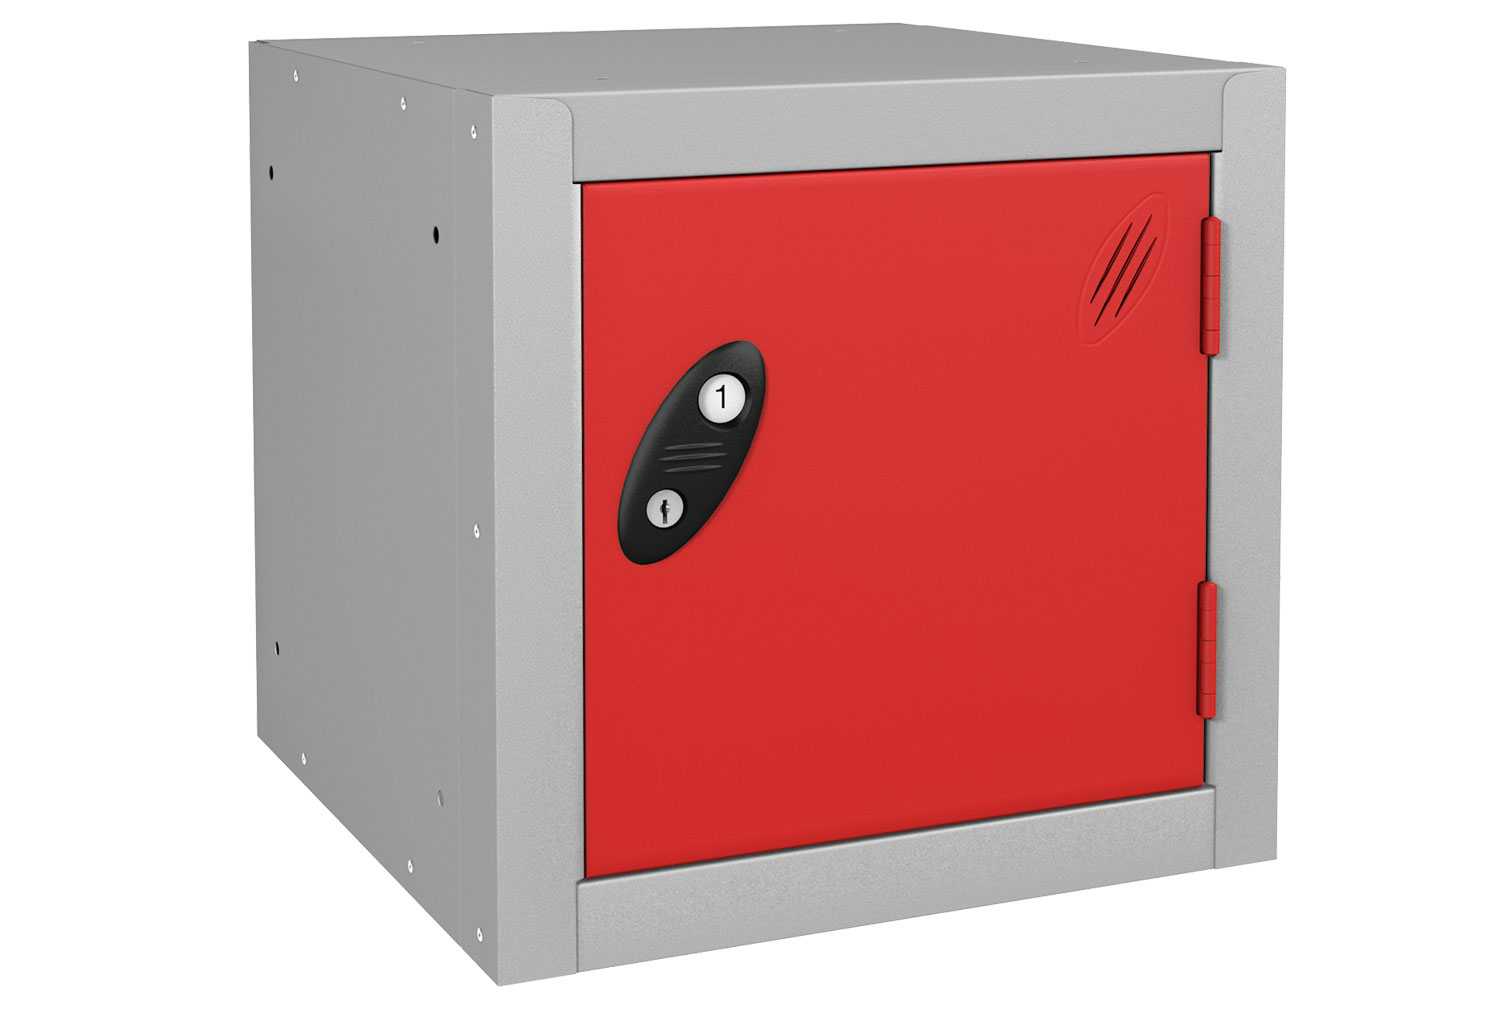 Probe Cube Lockers, 31wx31dx31h (cm), Hasp Lock, Black Body, Red